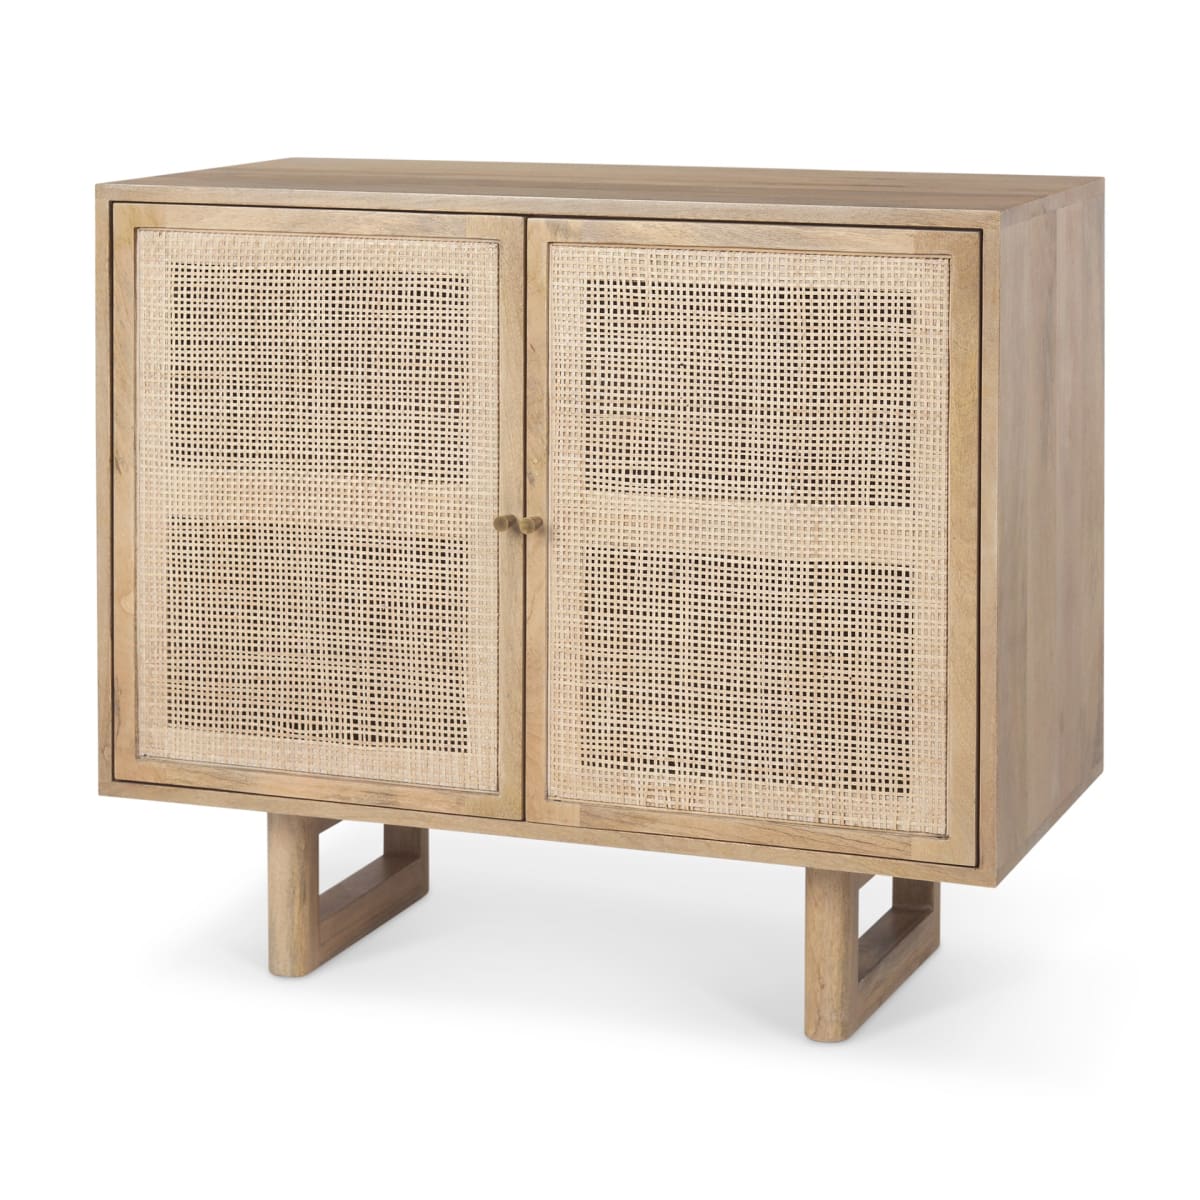 NEW ITEM ALERT‼️ Lucas Cane - Mirari Heirloom Furniture